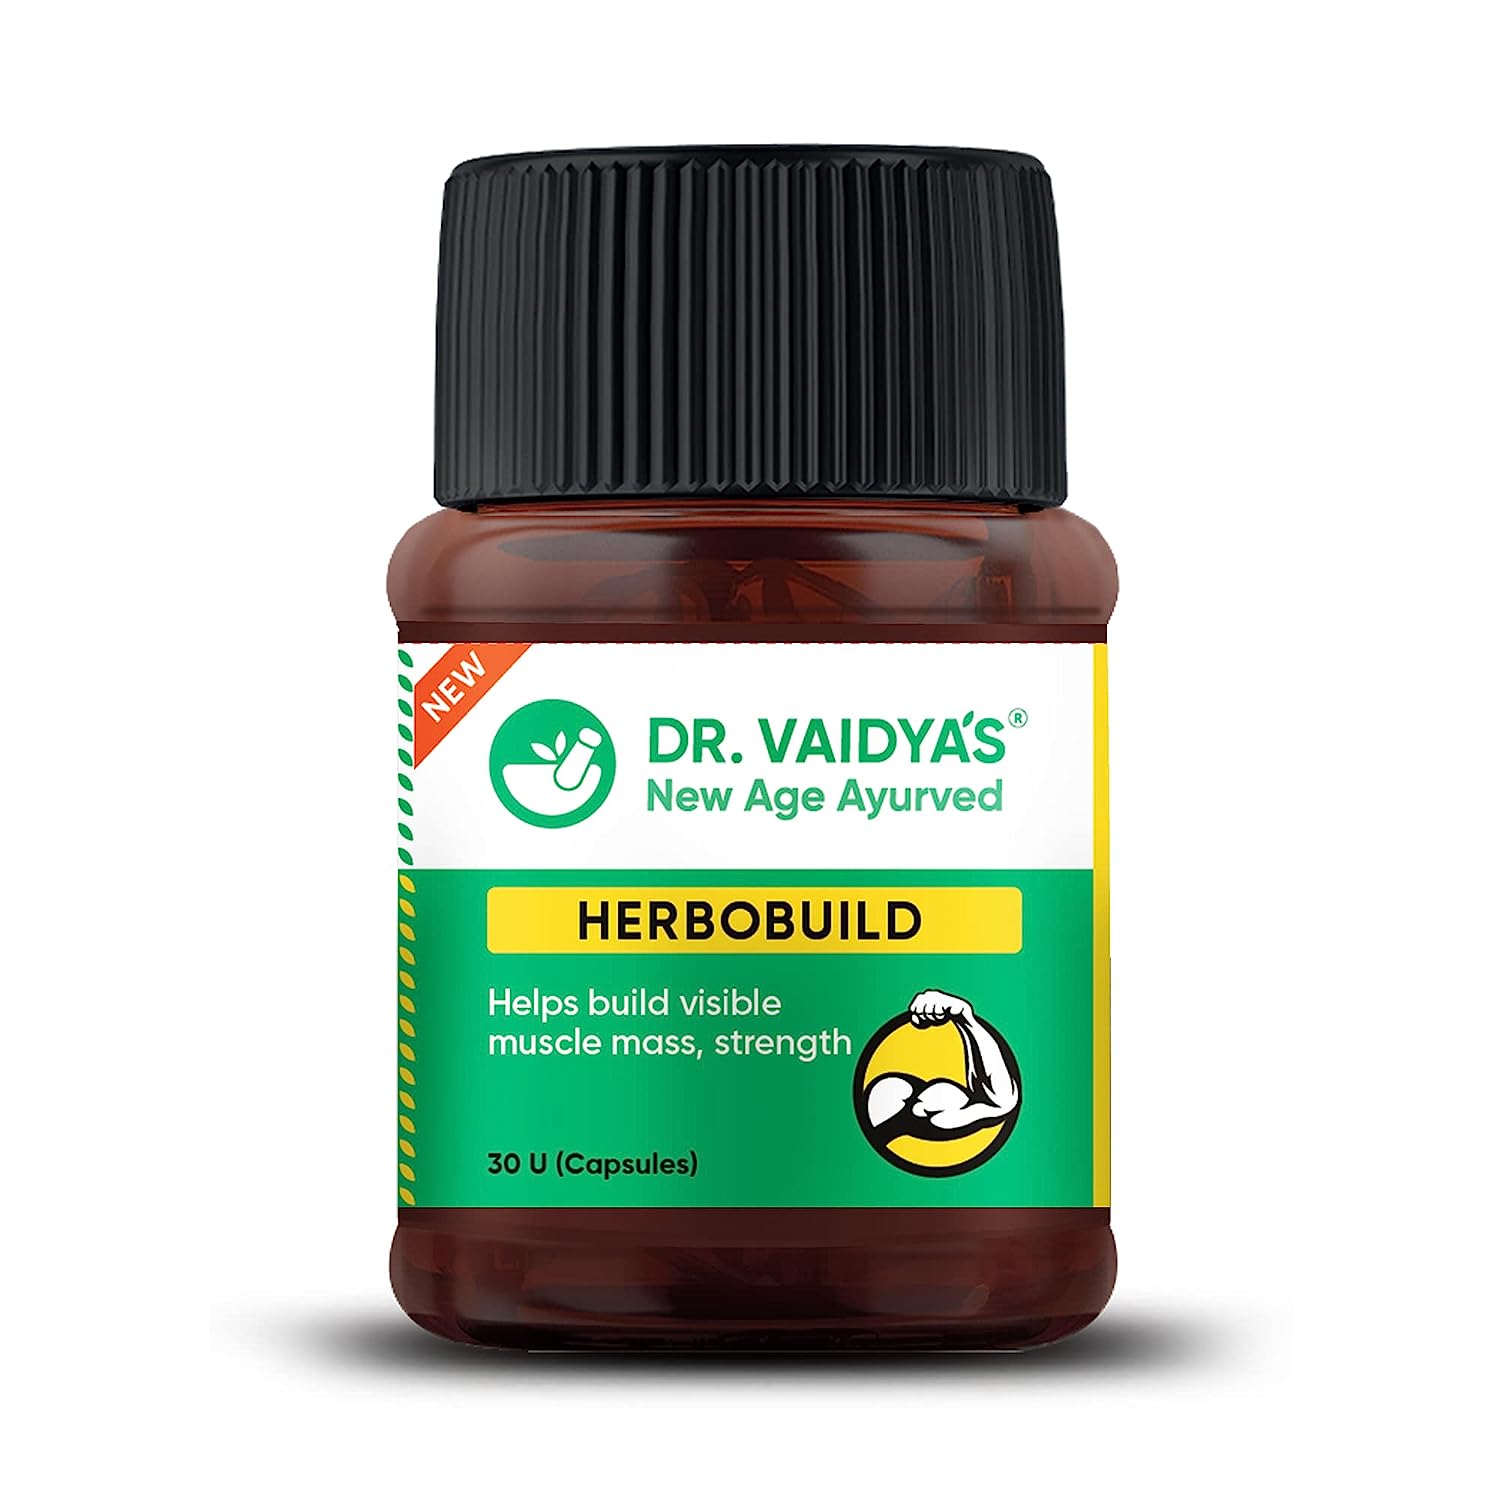 DR. VAIDYA'S new age ayurveda Herbobuild